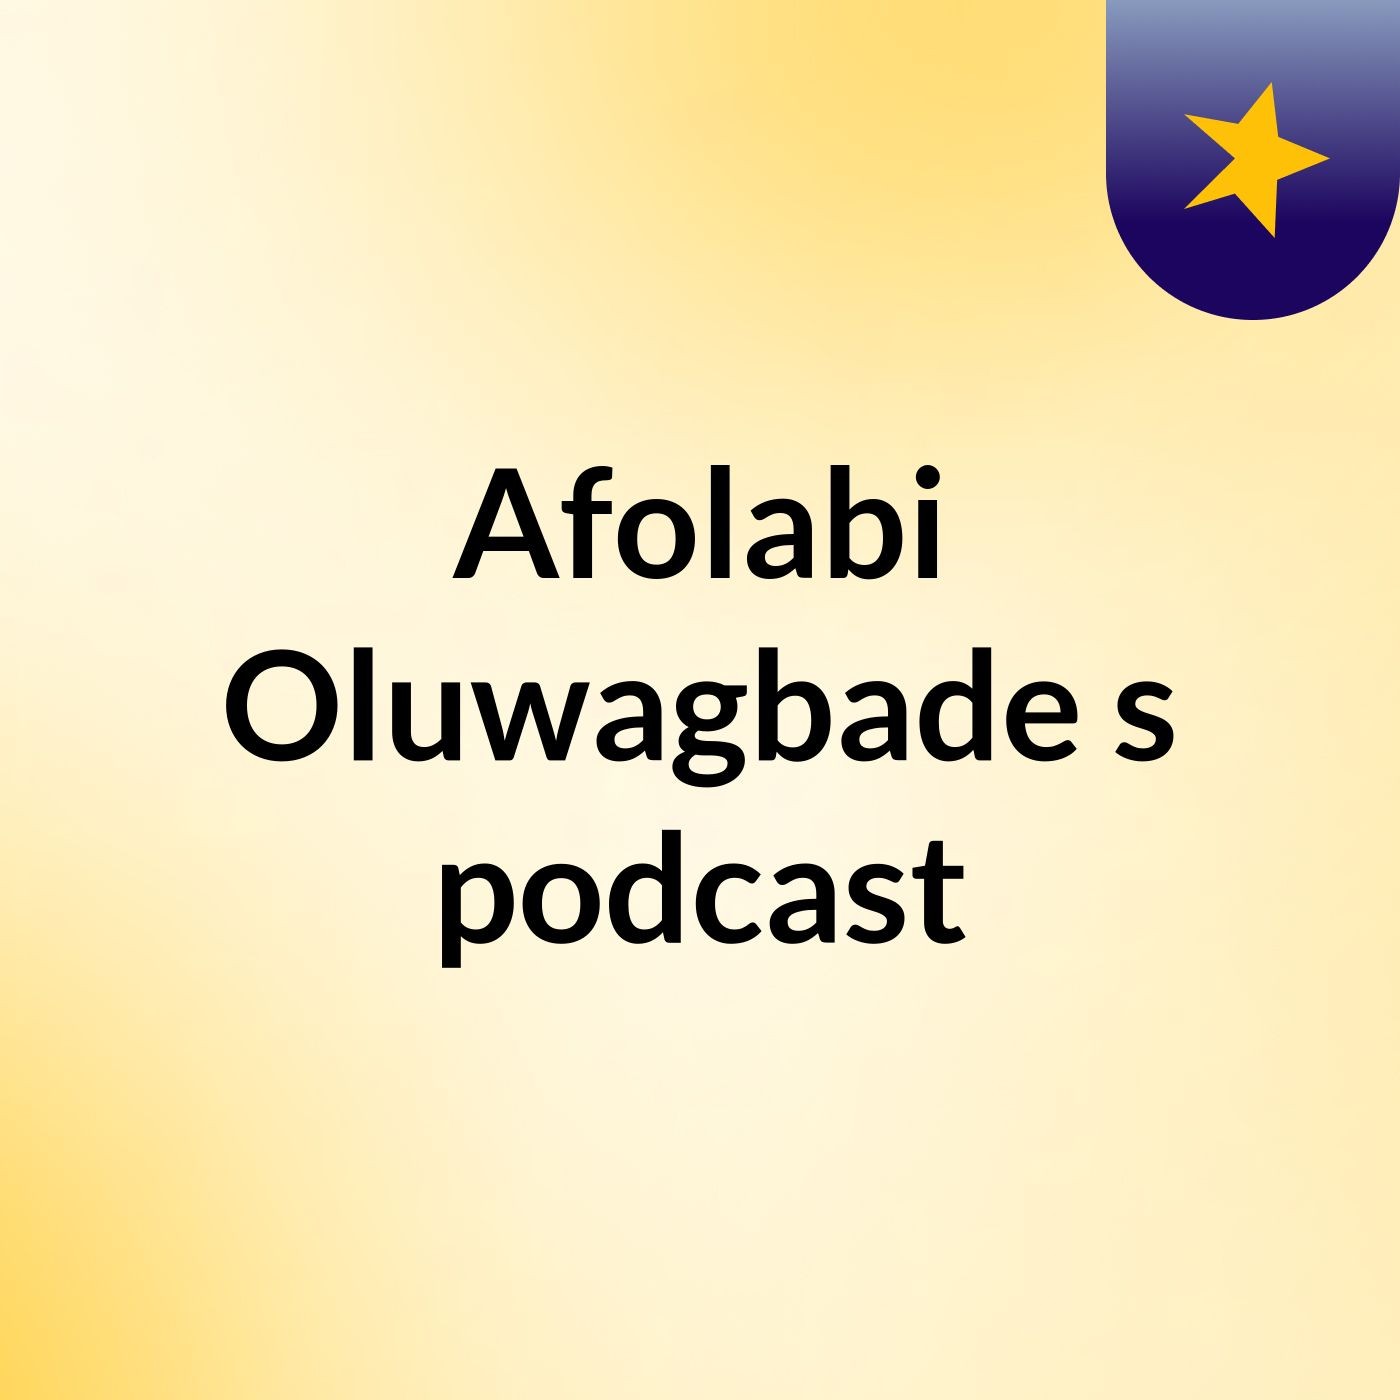 Episode 3 - Afolabi Oluwagbade's podcast